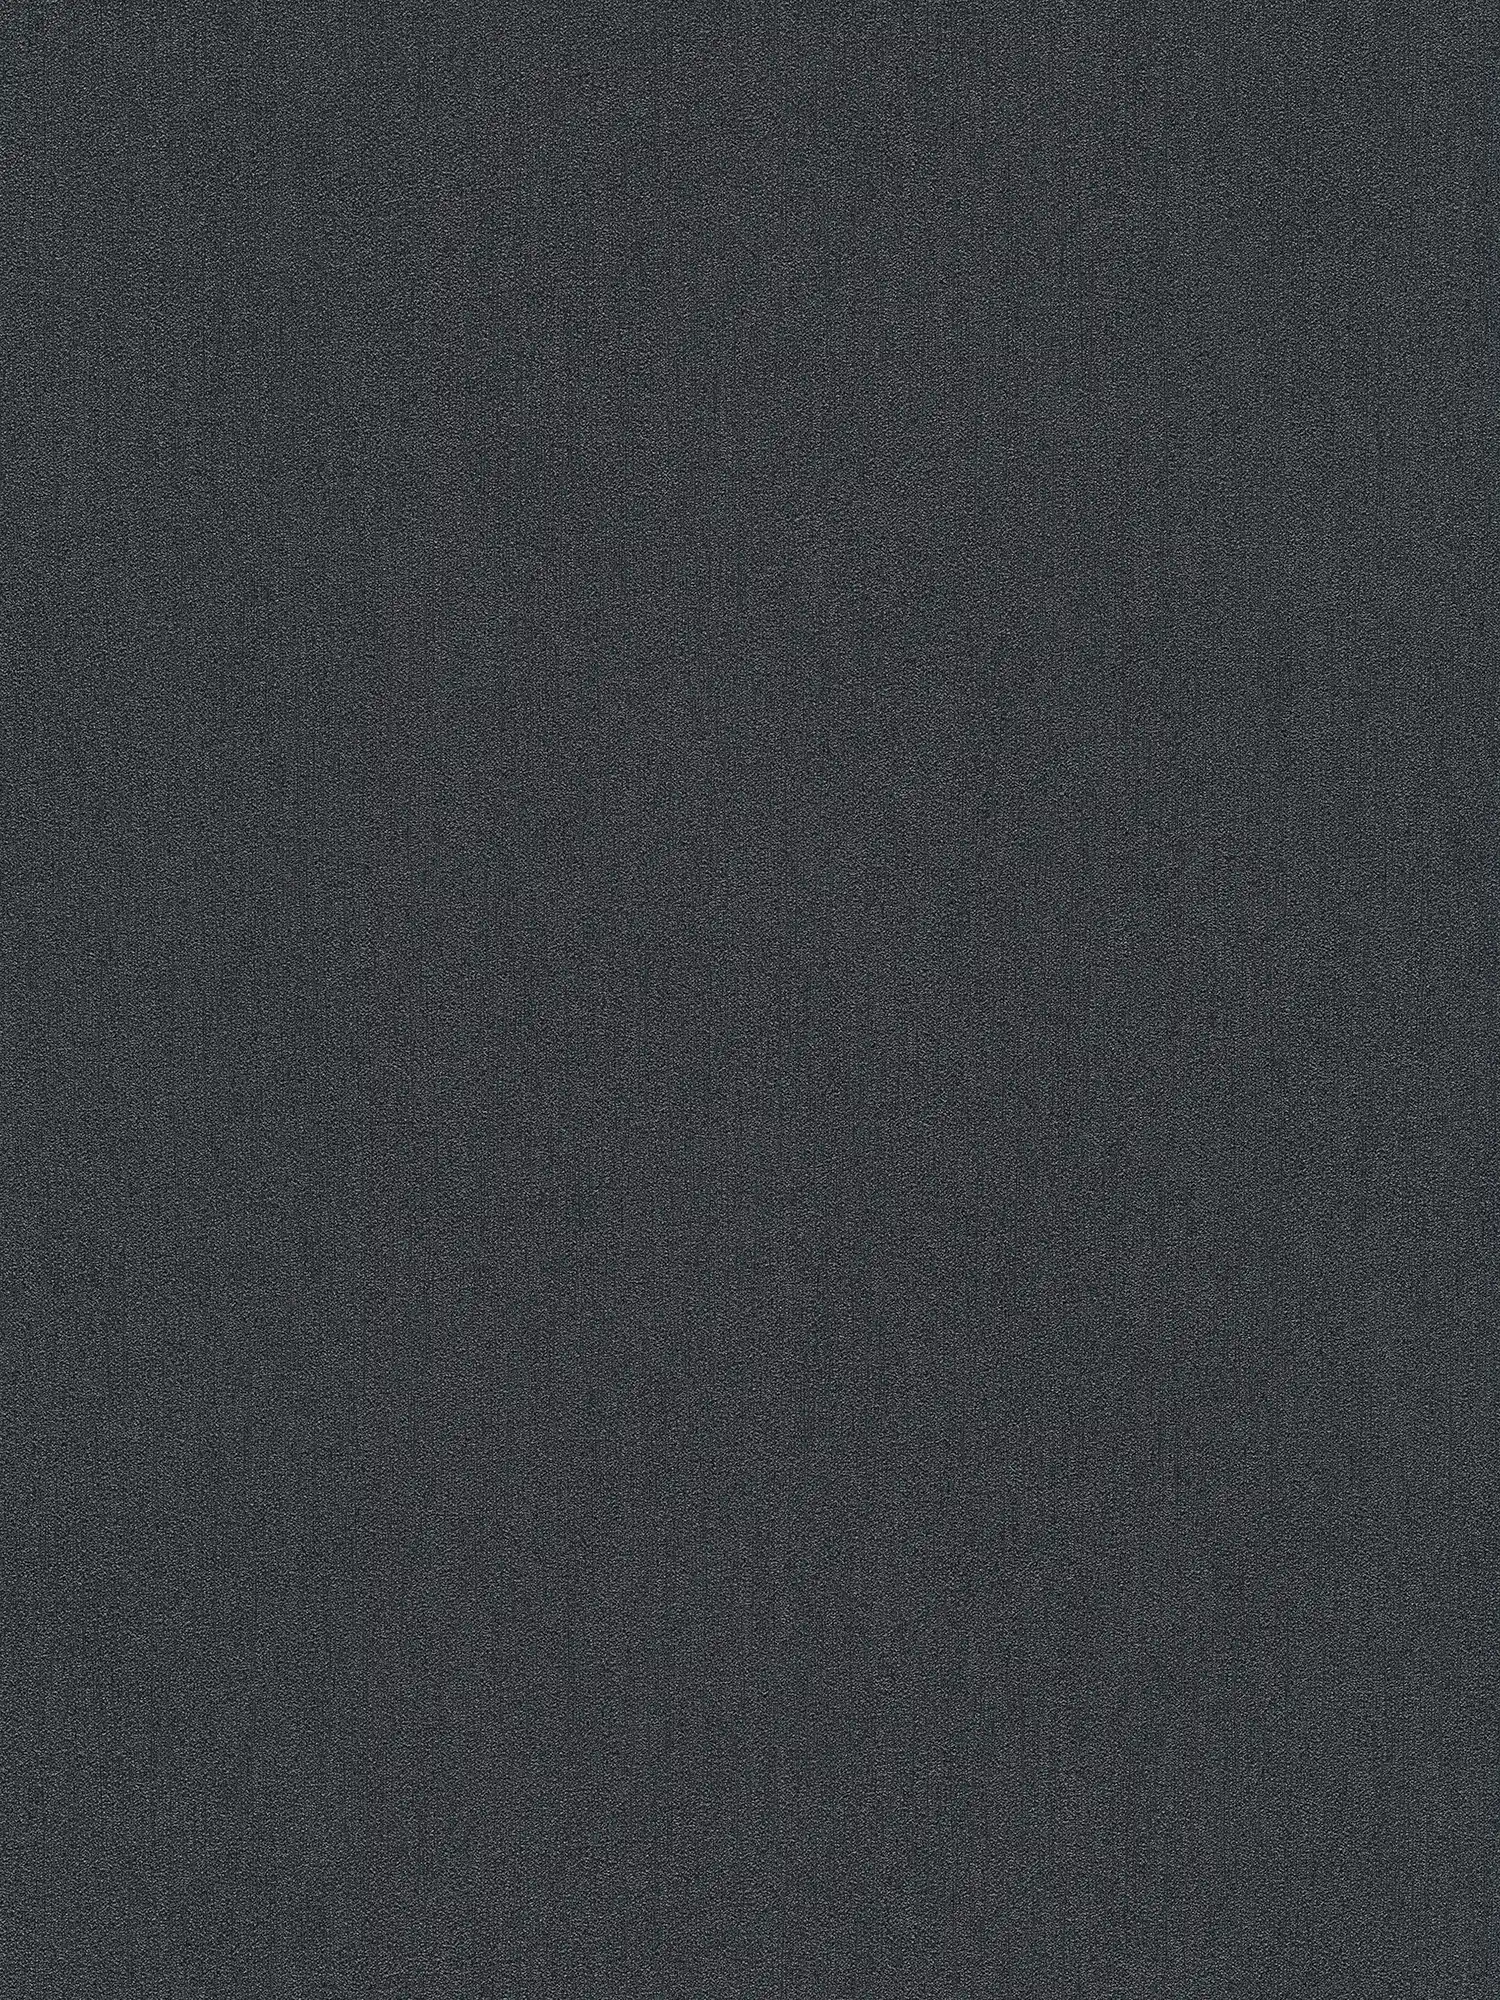 Karl LAGERFELD non-woven wallpaper plain & texture - black
